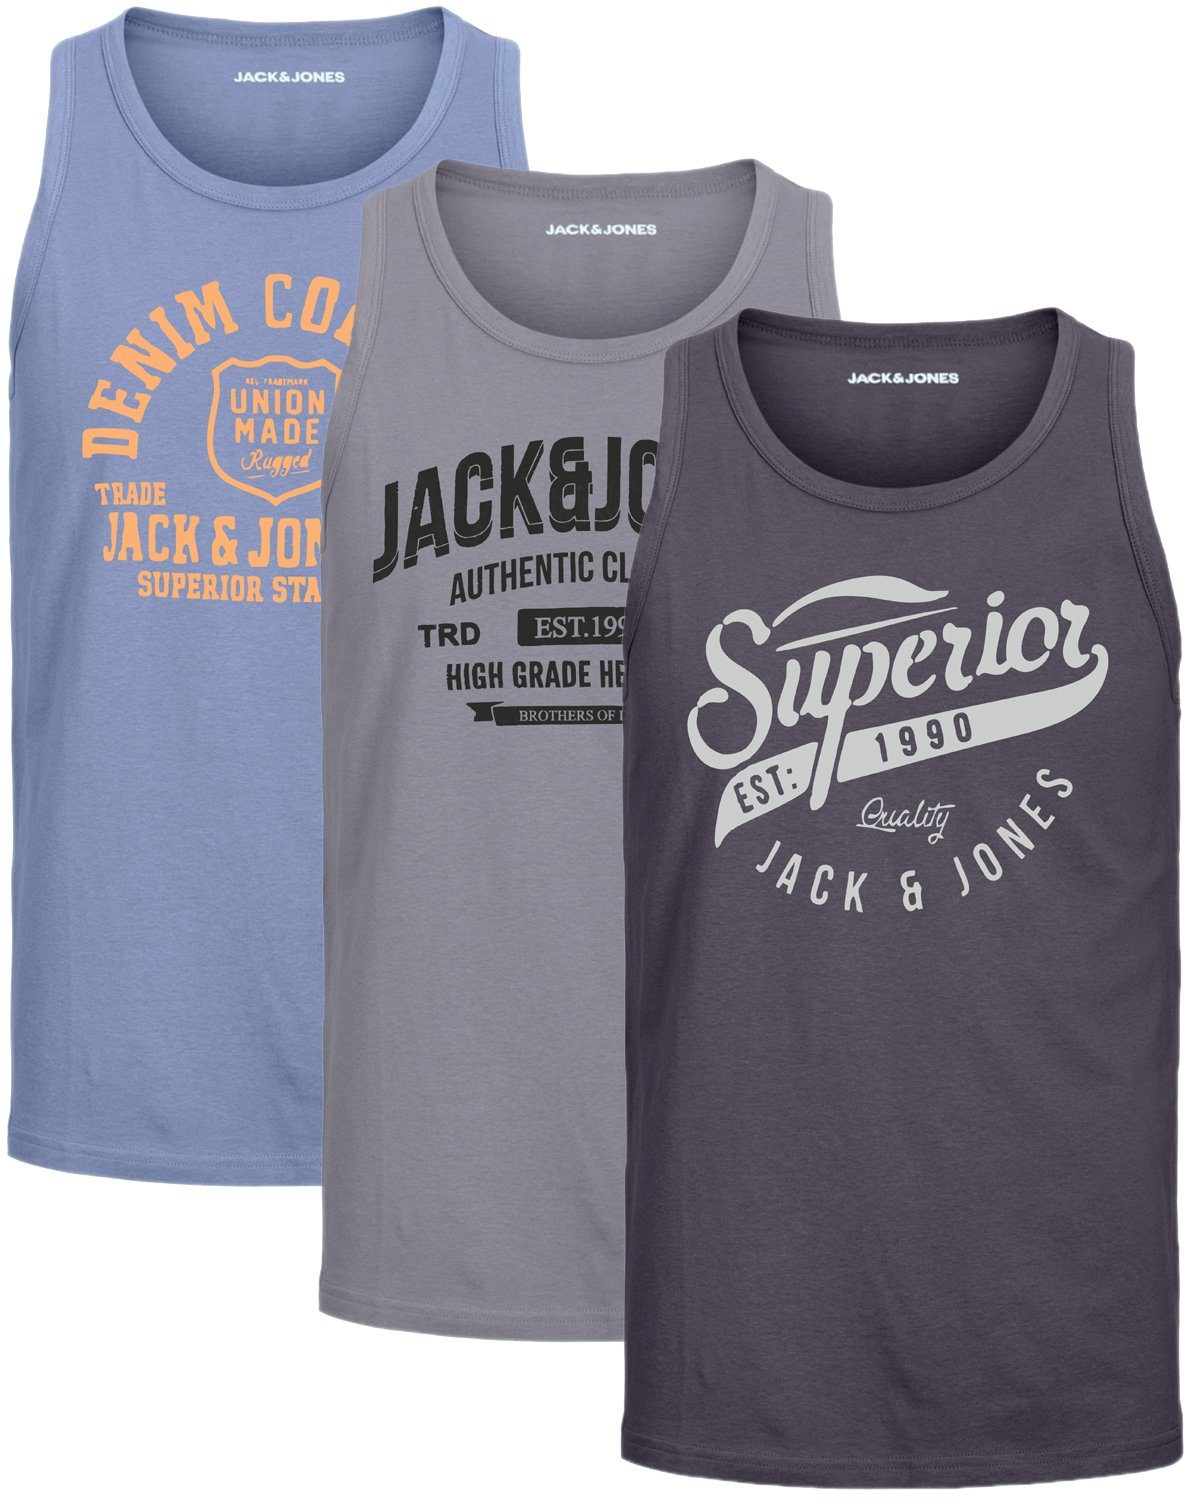 Jack & Jones Tanktop Bequemes Slimfit Shirt mit Printdruck (3er-Pack) unifarbenes Oberteil aus Baumwolle, Розмір XL